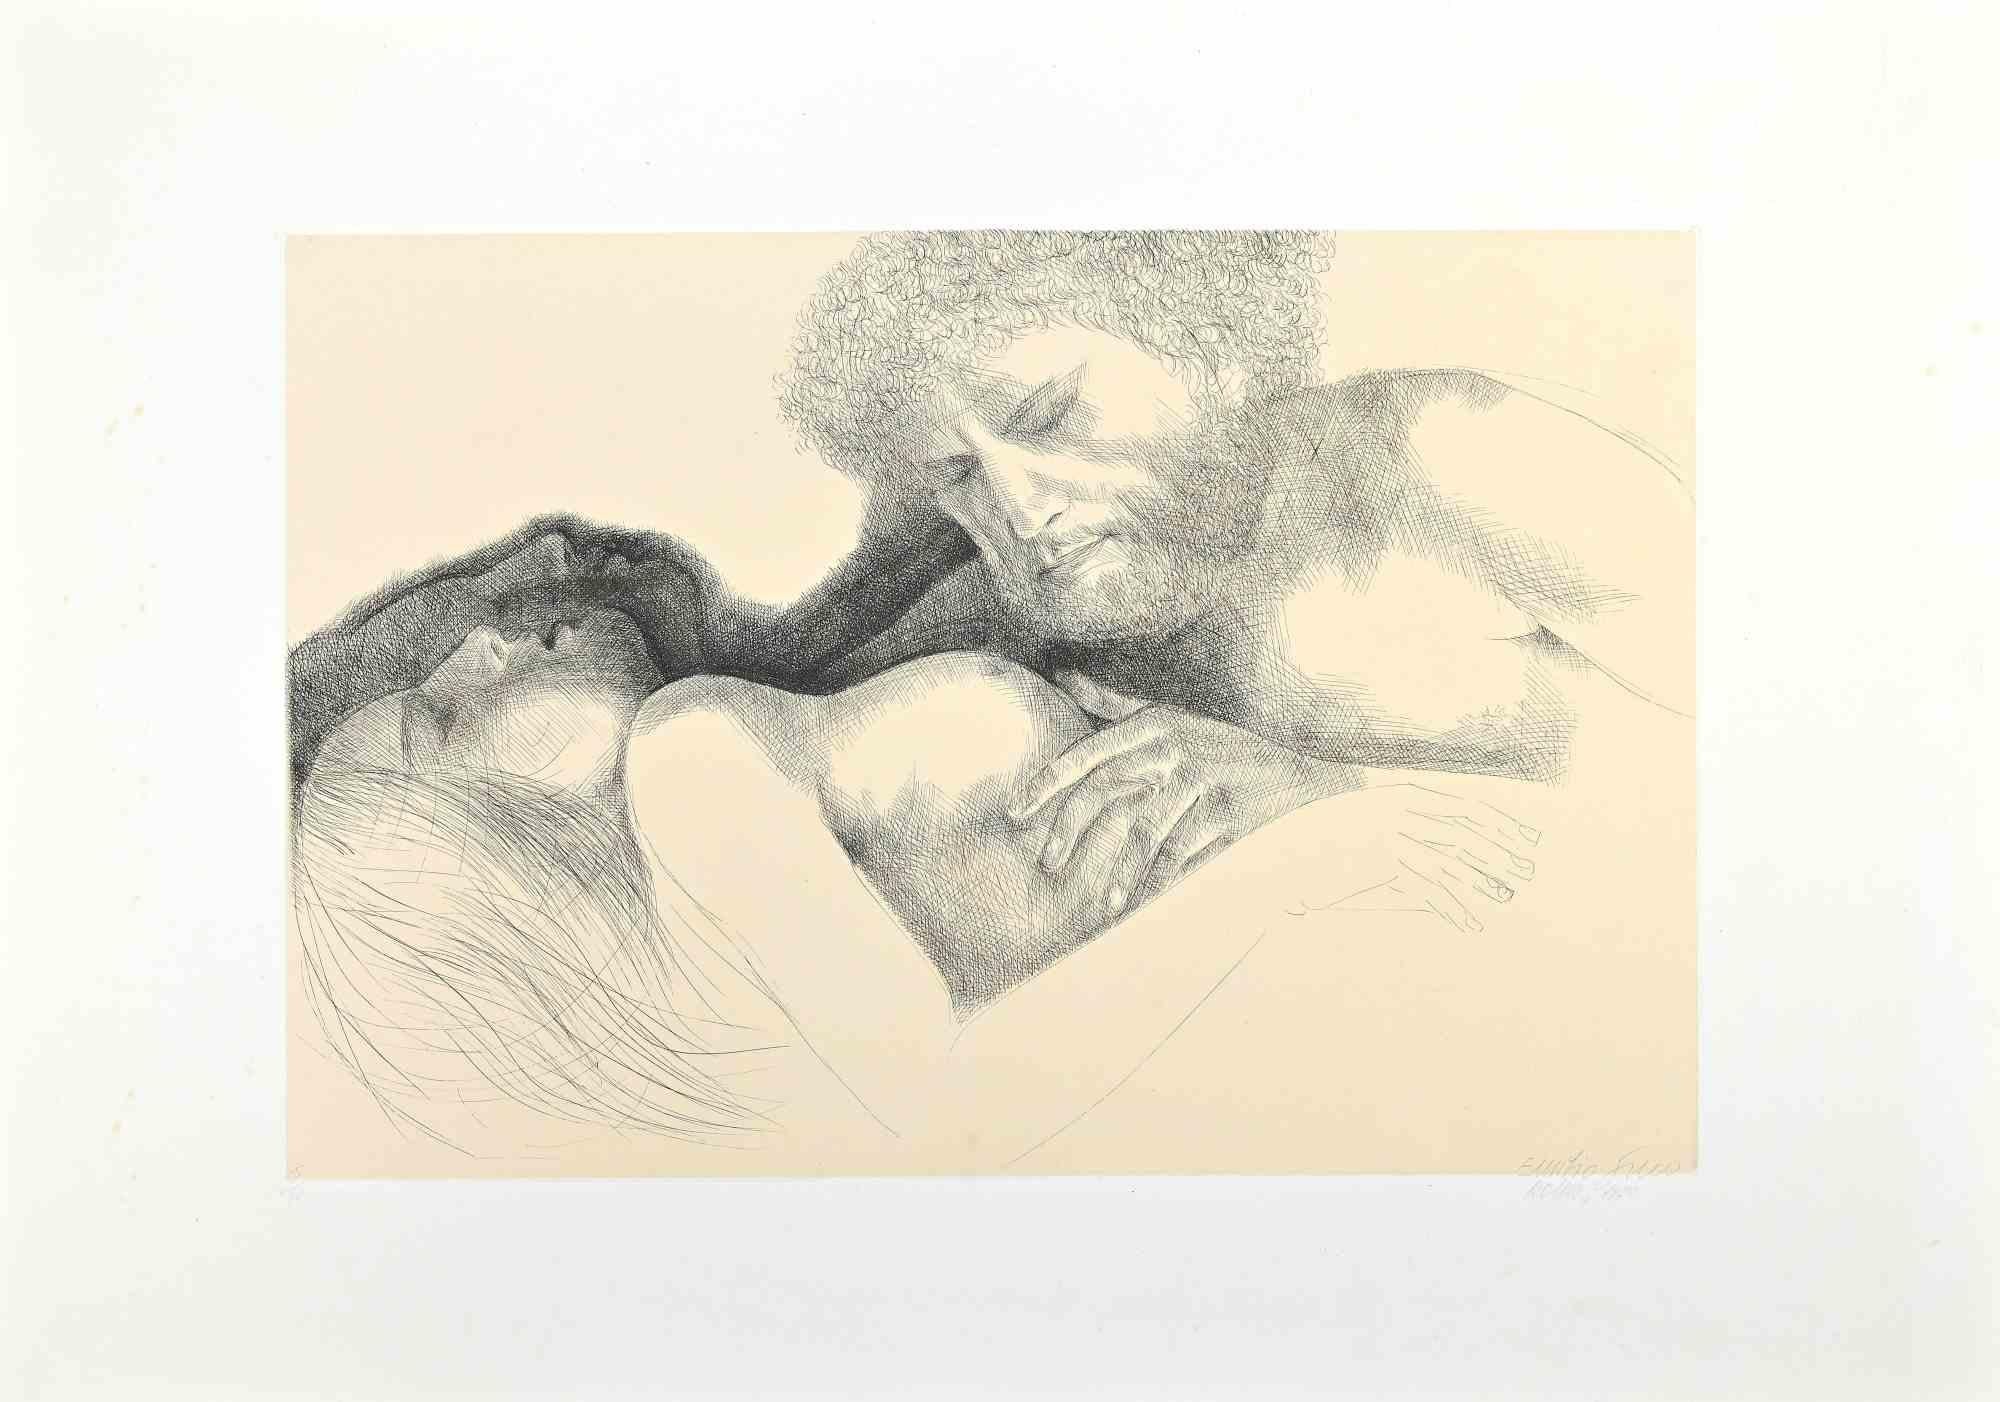 Emilio Greco Figurative Print - Return of Ulysses - Etching by E. Greco - 1970